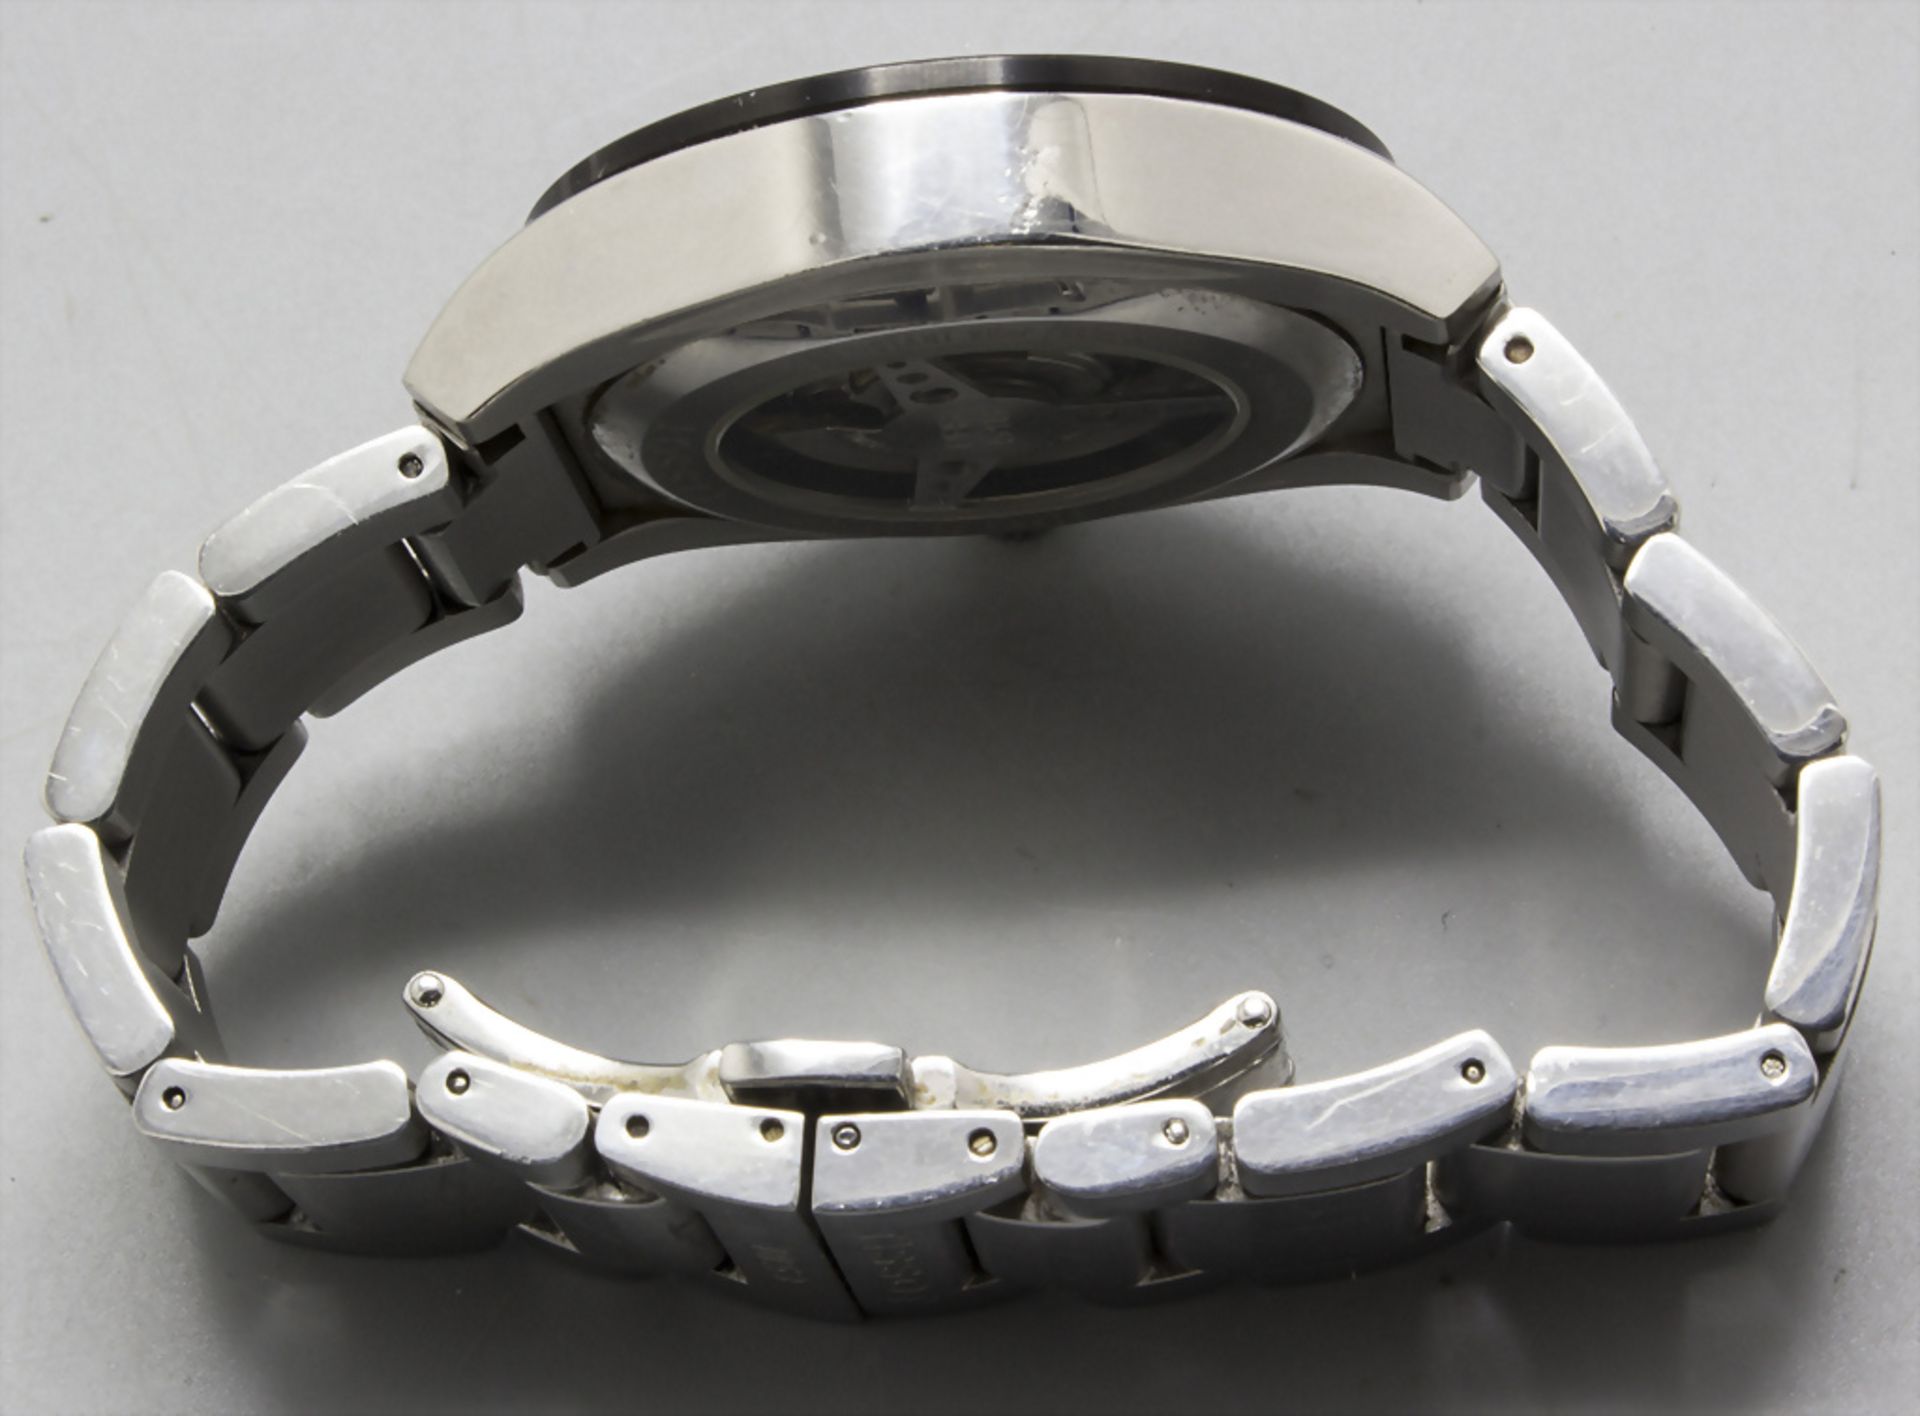 HAU Tissot PRS 516 Automatik / A men's wrist watch, Schweiz / Swiss um 2000 - Image 5 of 6